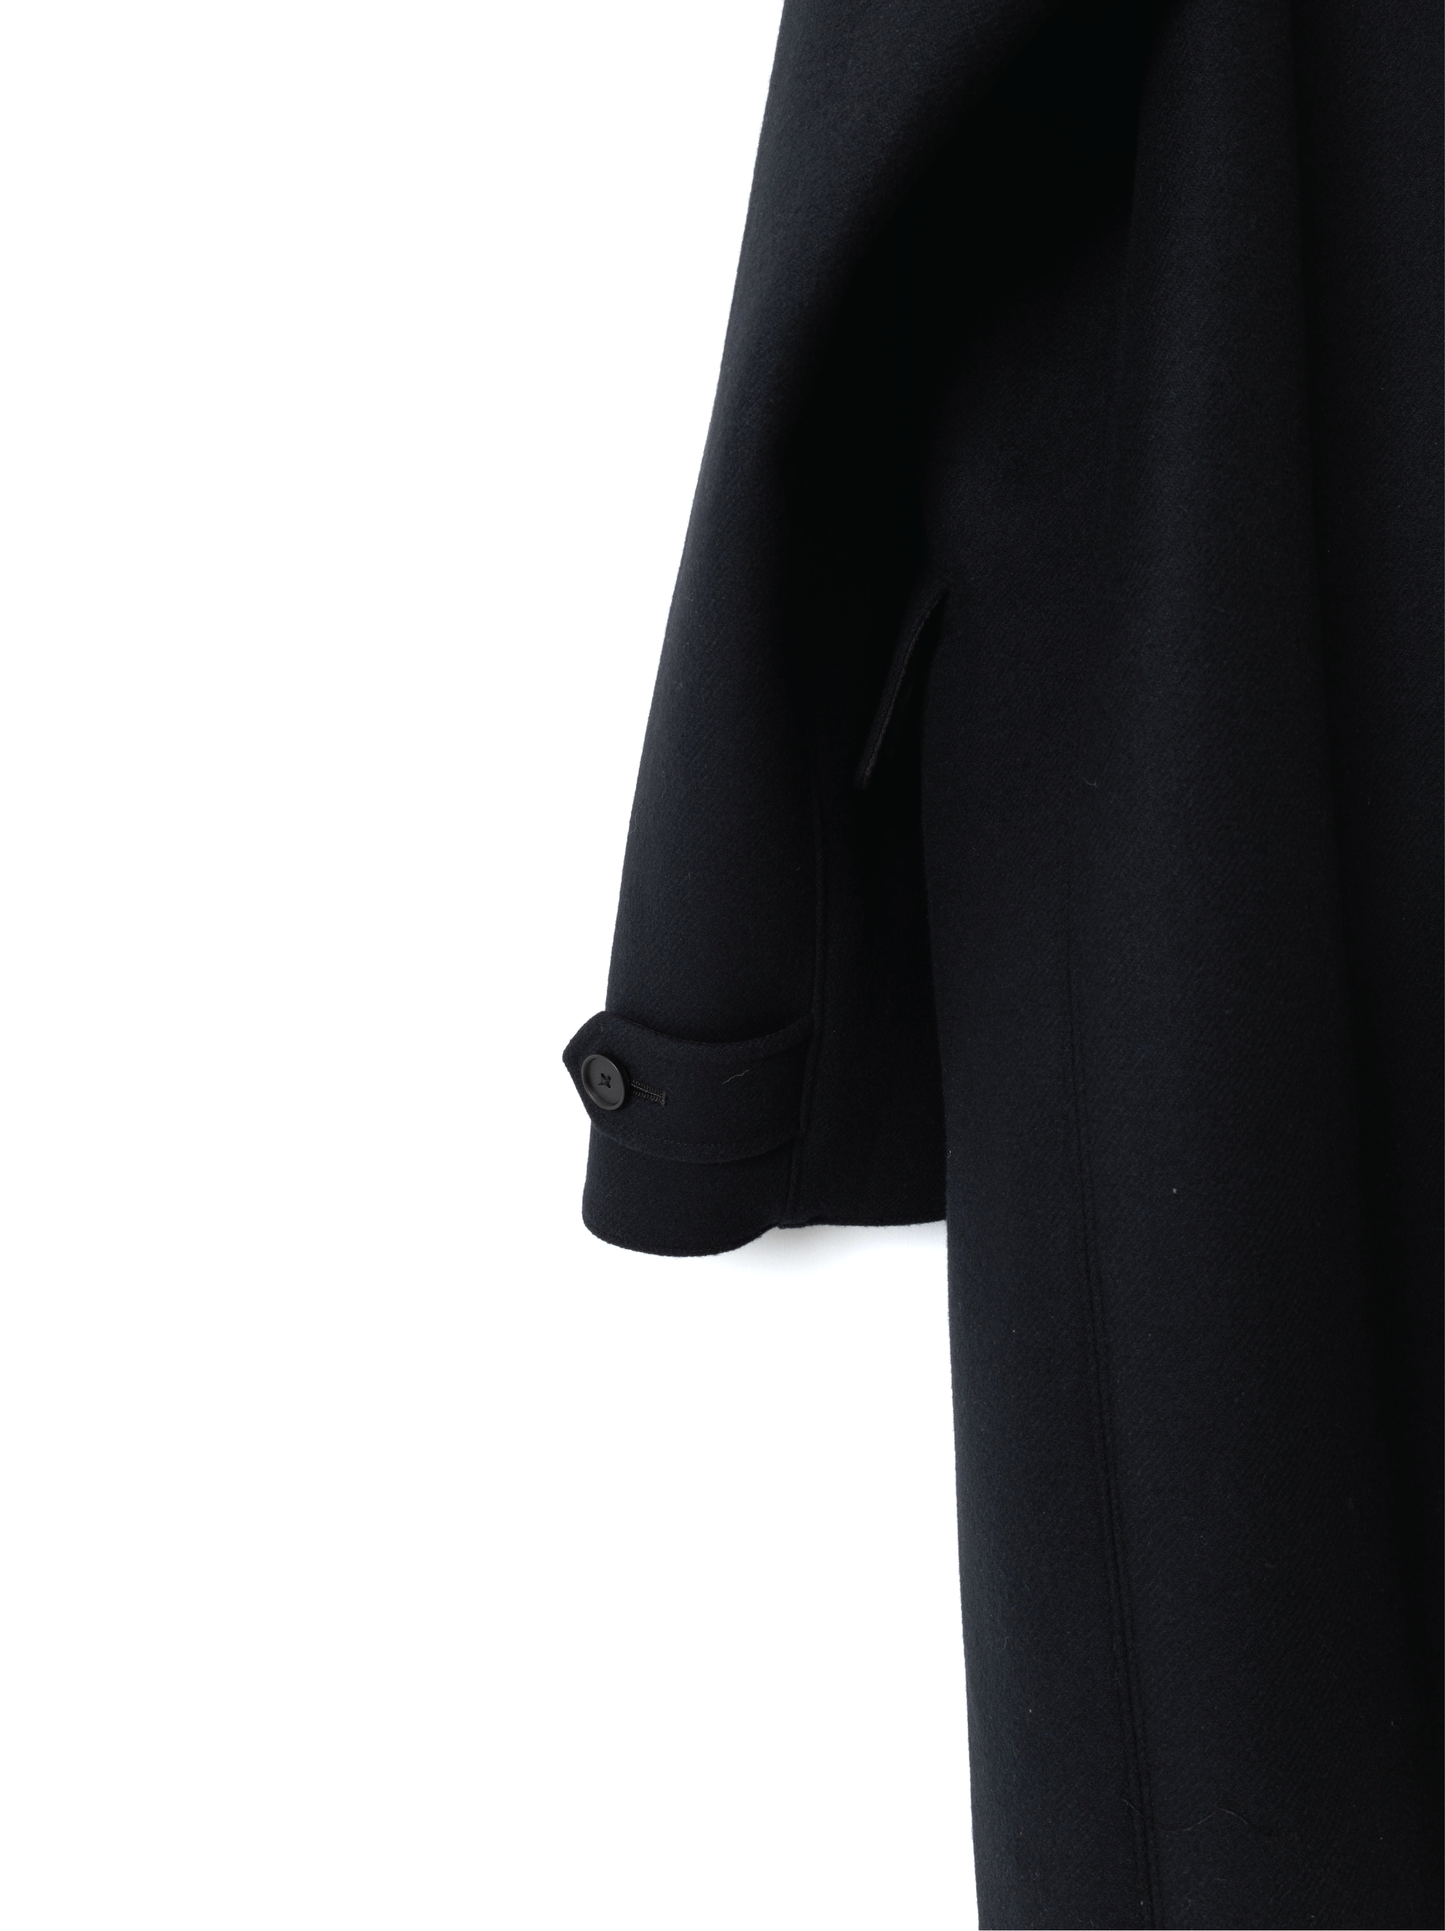 DOUBLE CLOTH Super160’ s WOOL LONG COAT for WOMEN｜BLACK